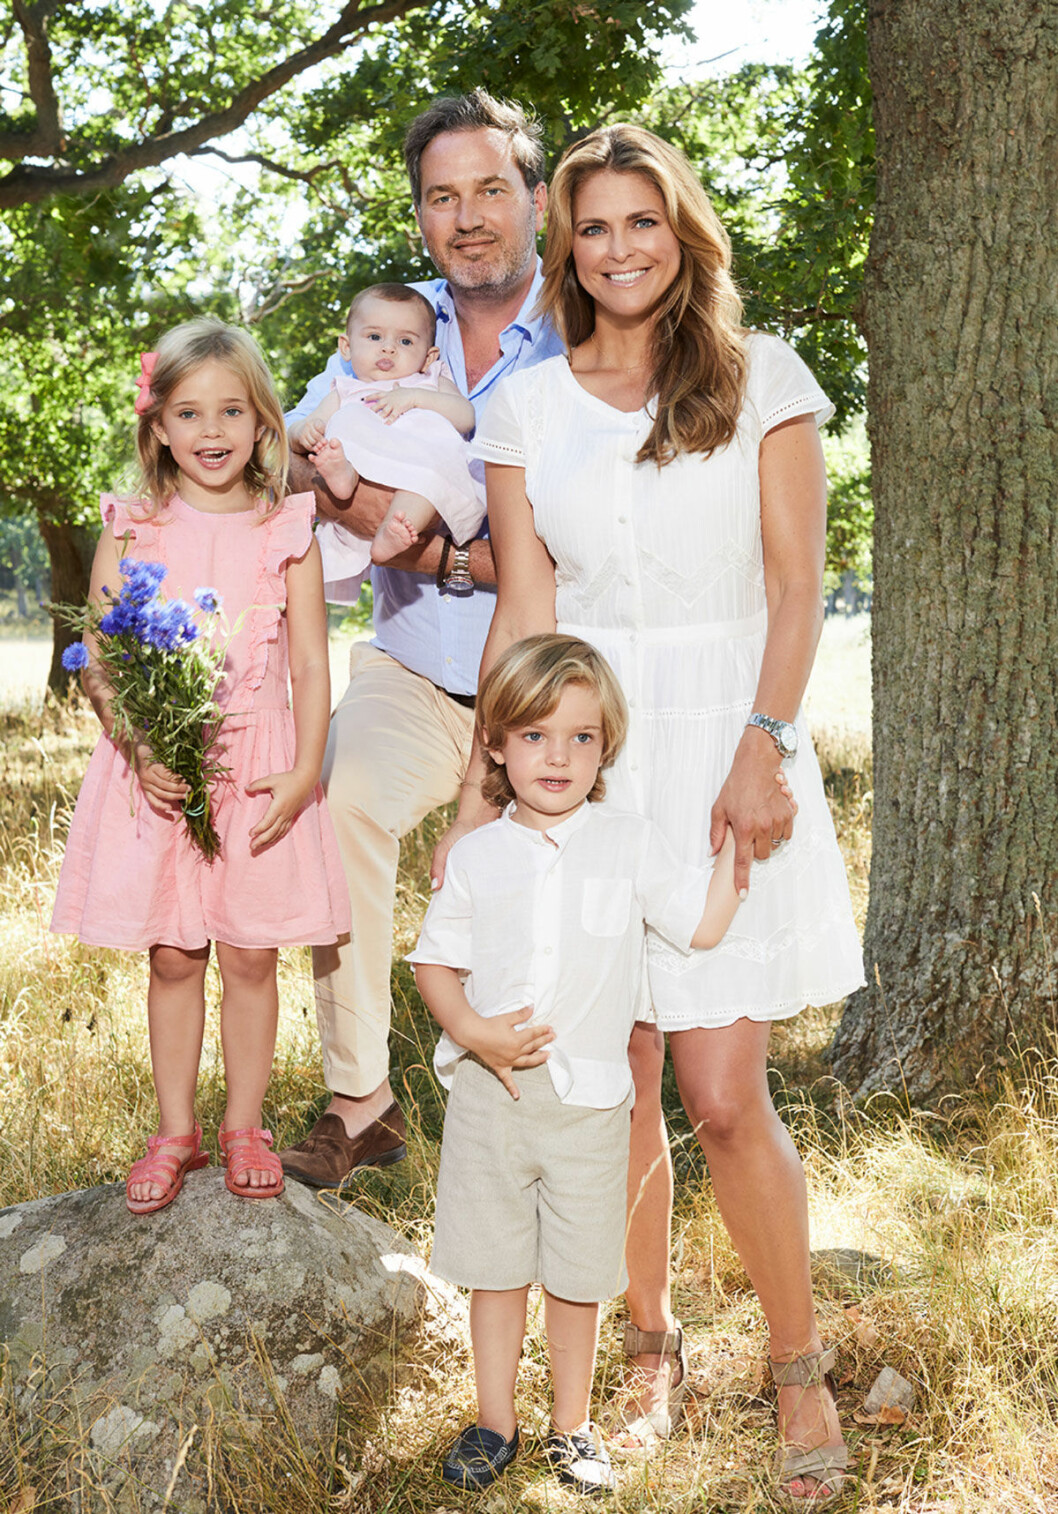 Prinsessan Madeleine och Chris O'Neill samt barnen Leonore, Nicolas och Adrienne.